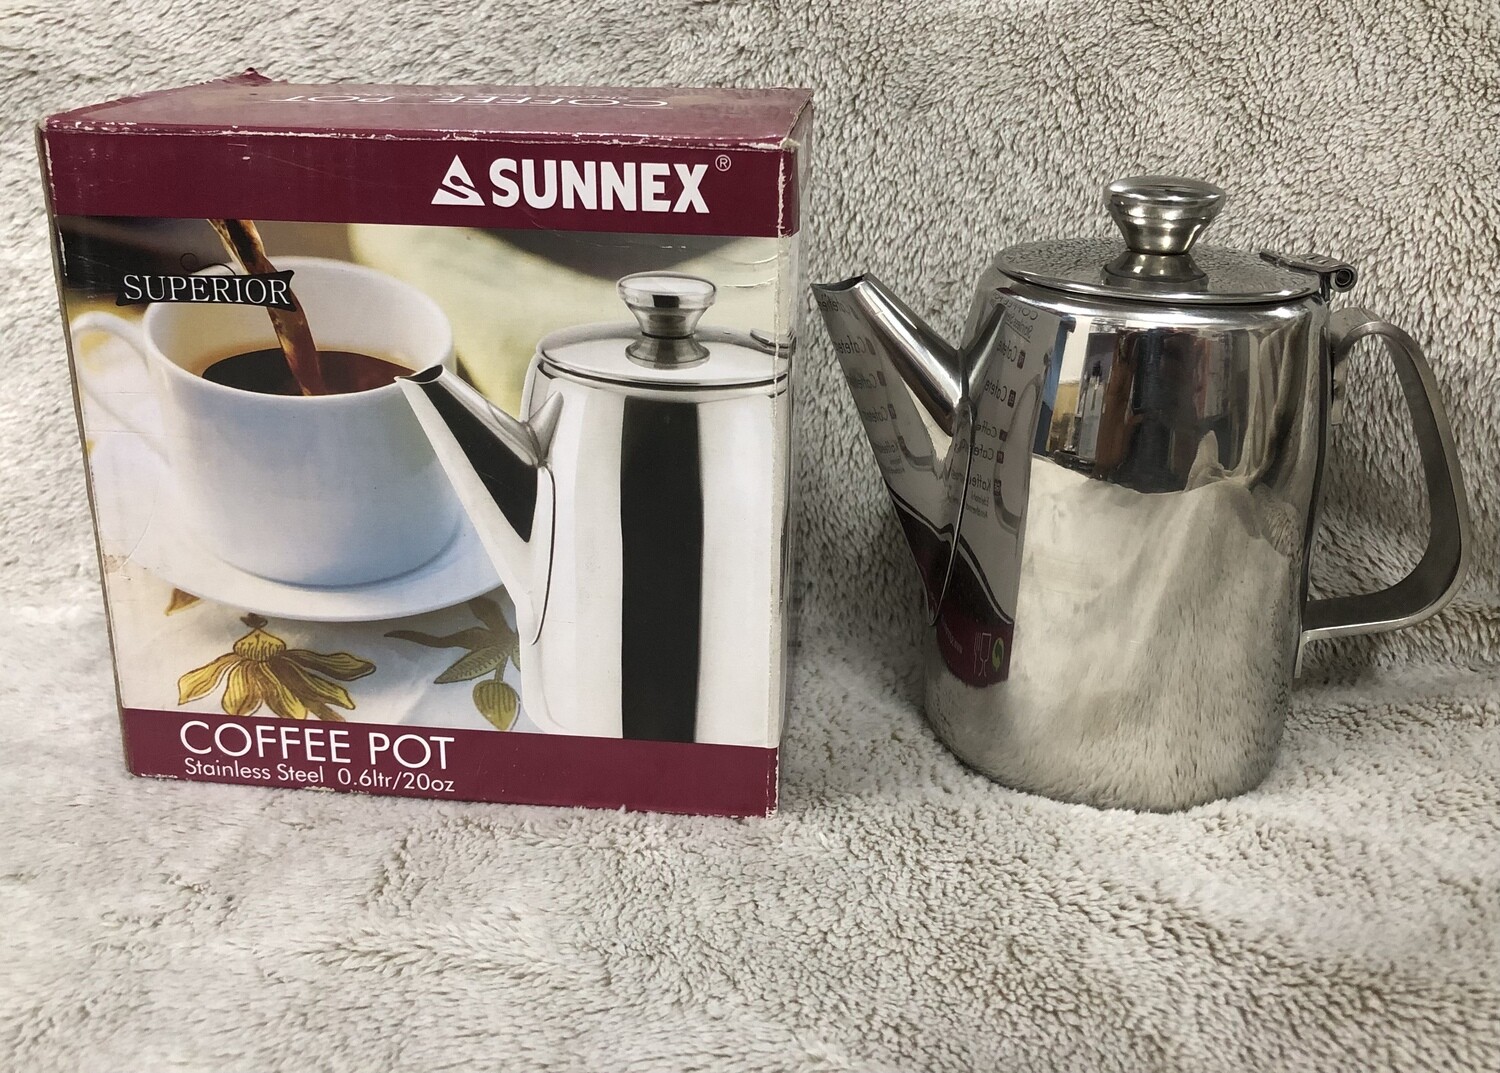 Sunnex Stainless Steel Coffee Pot 0.6L/20Ofl M11032